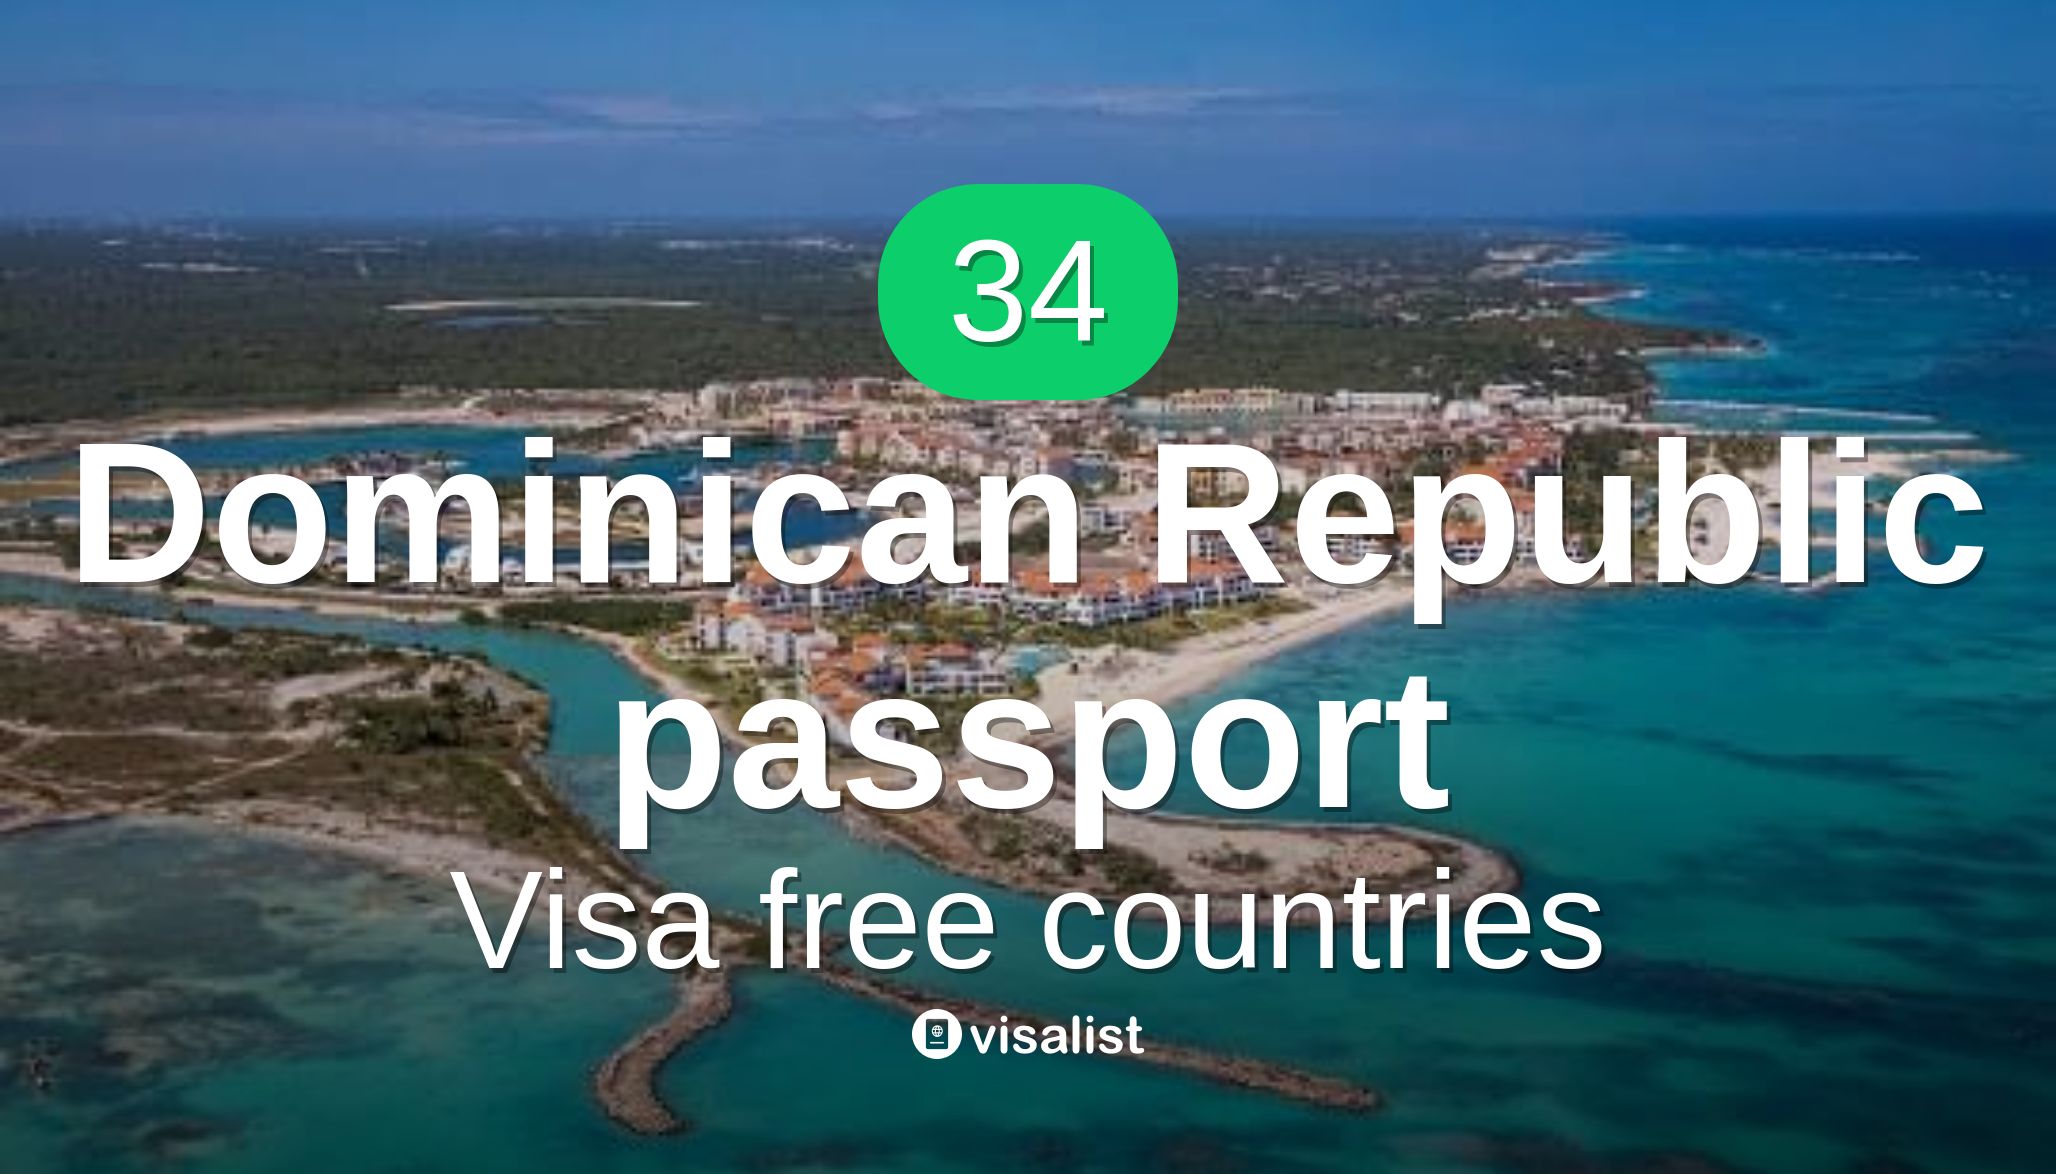 visa free travel for dominican republic citizens